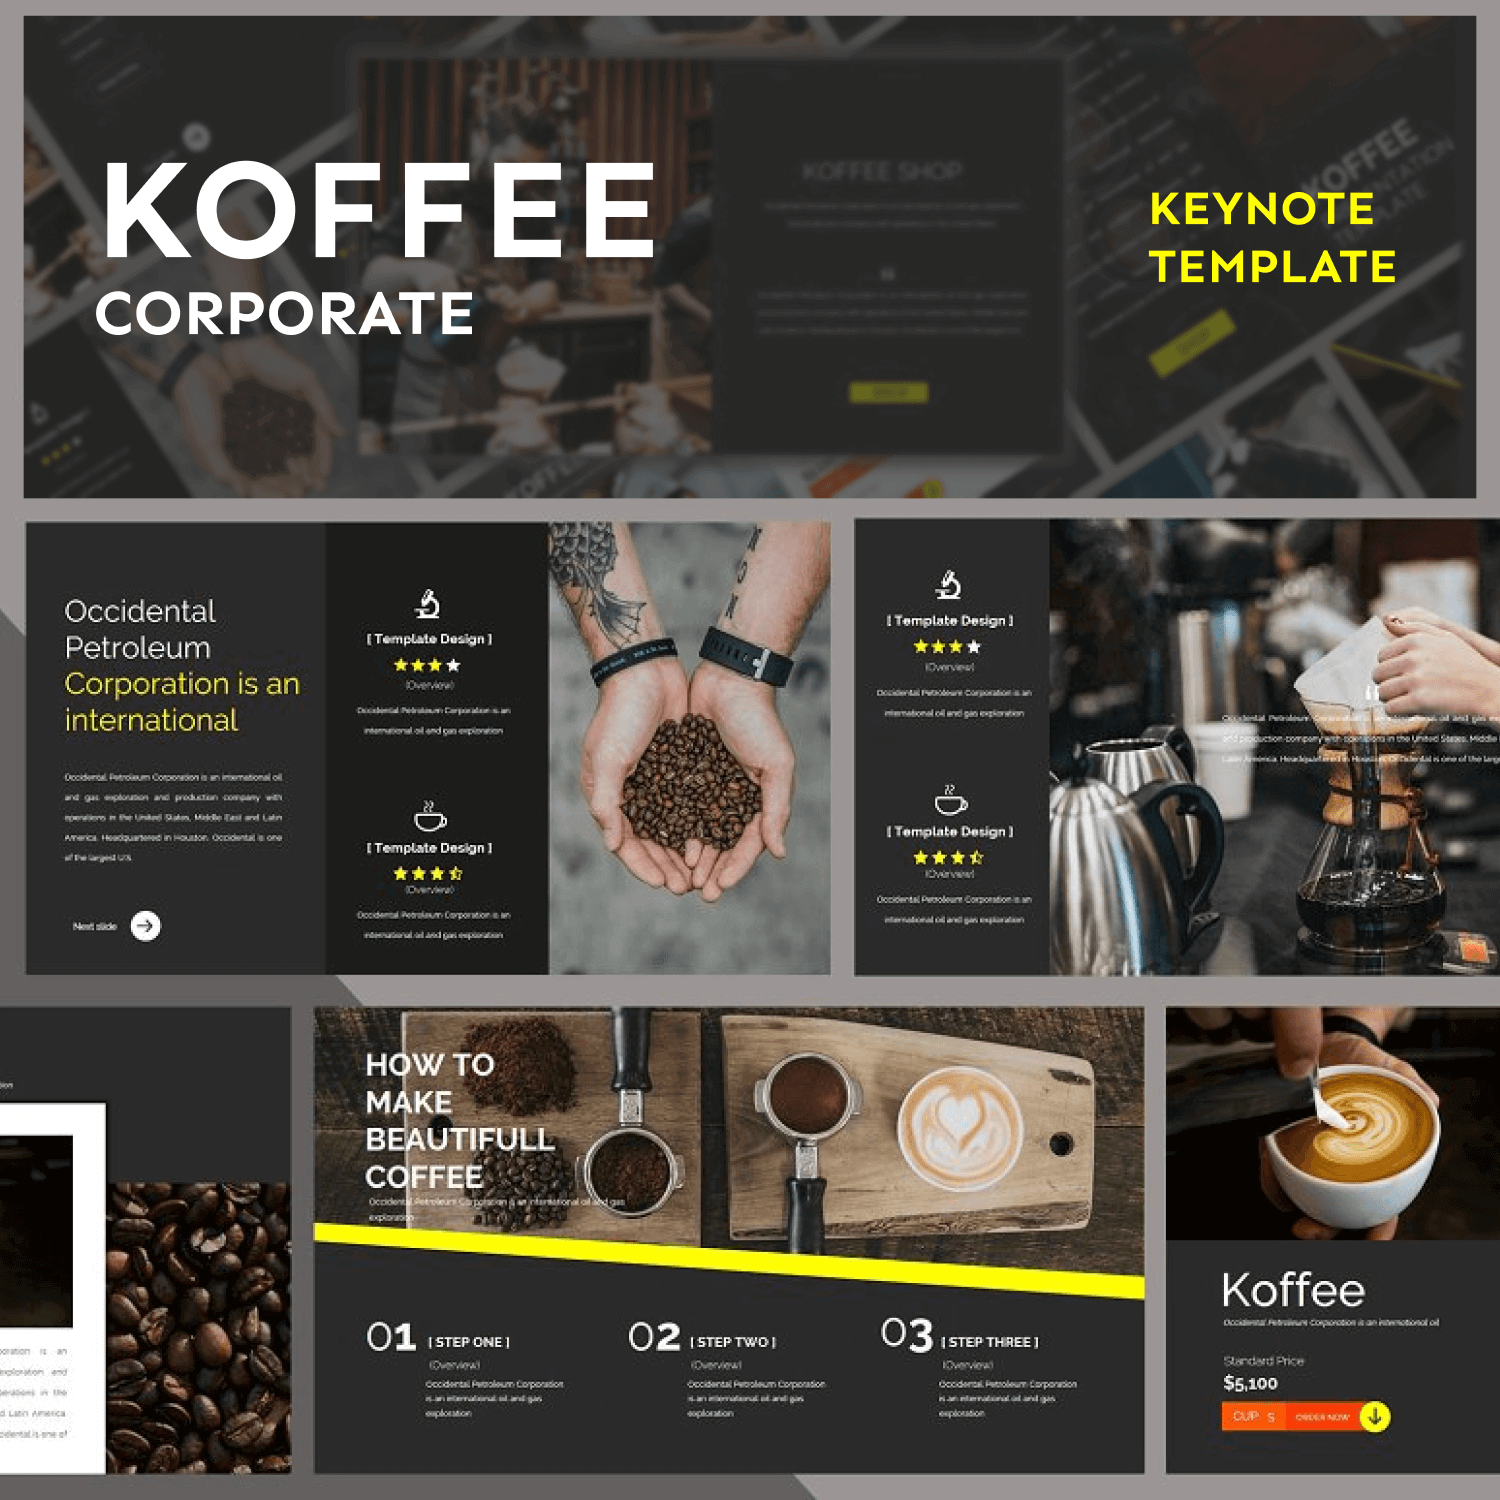 Koffee Template Design.